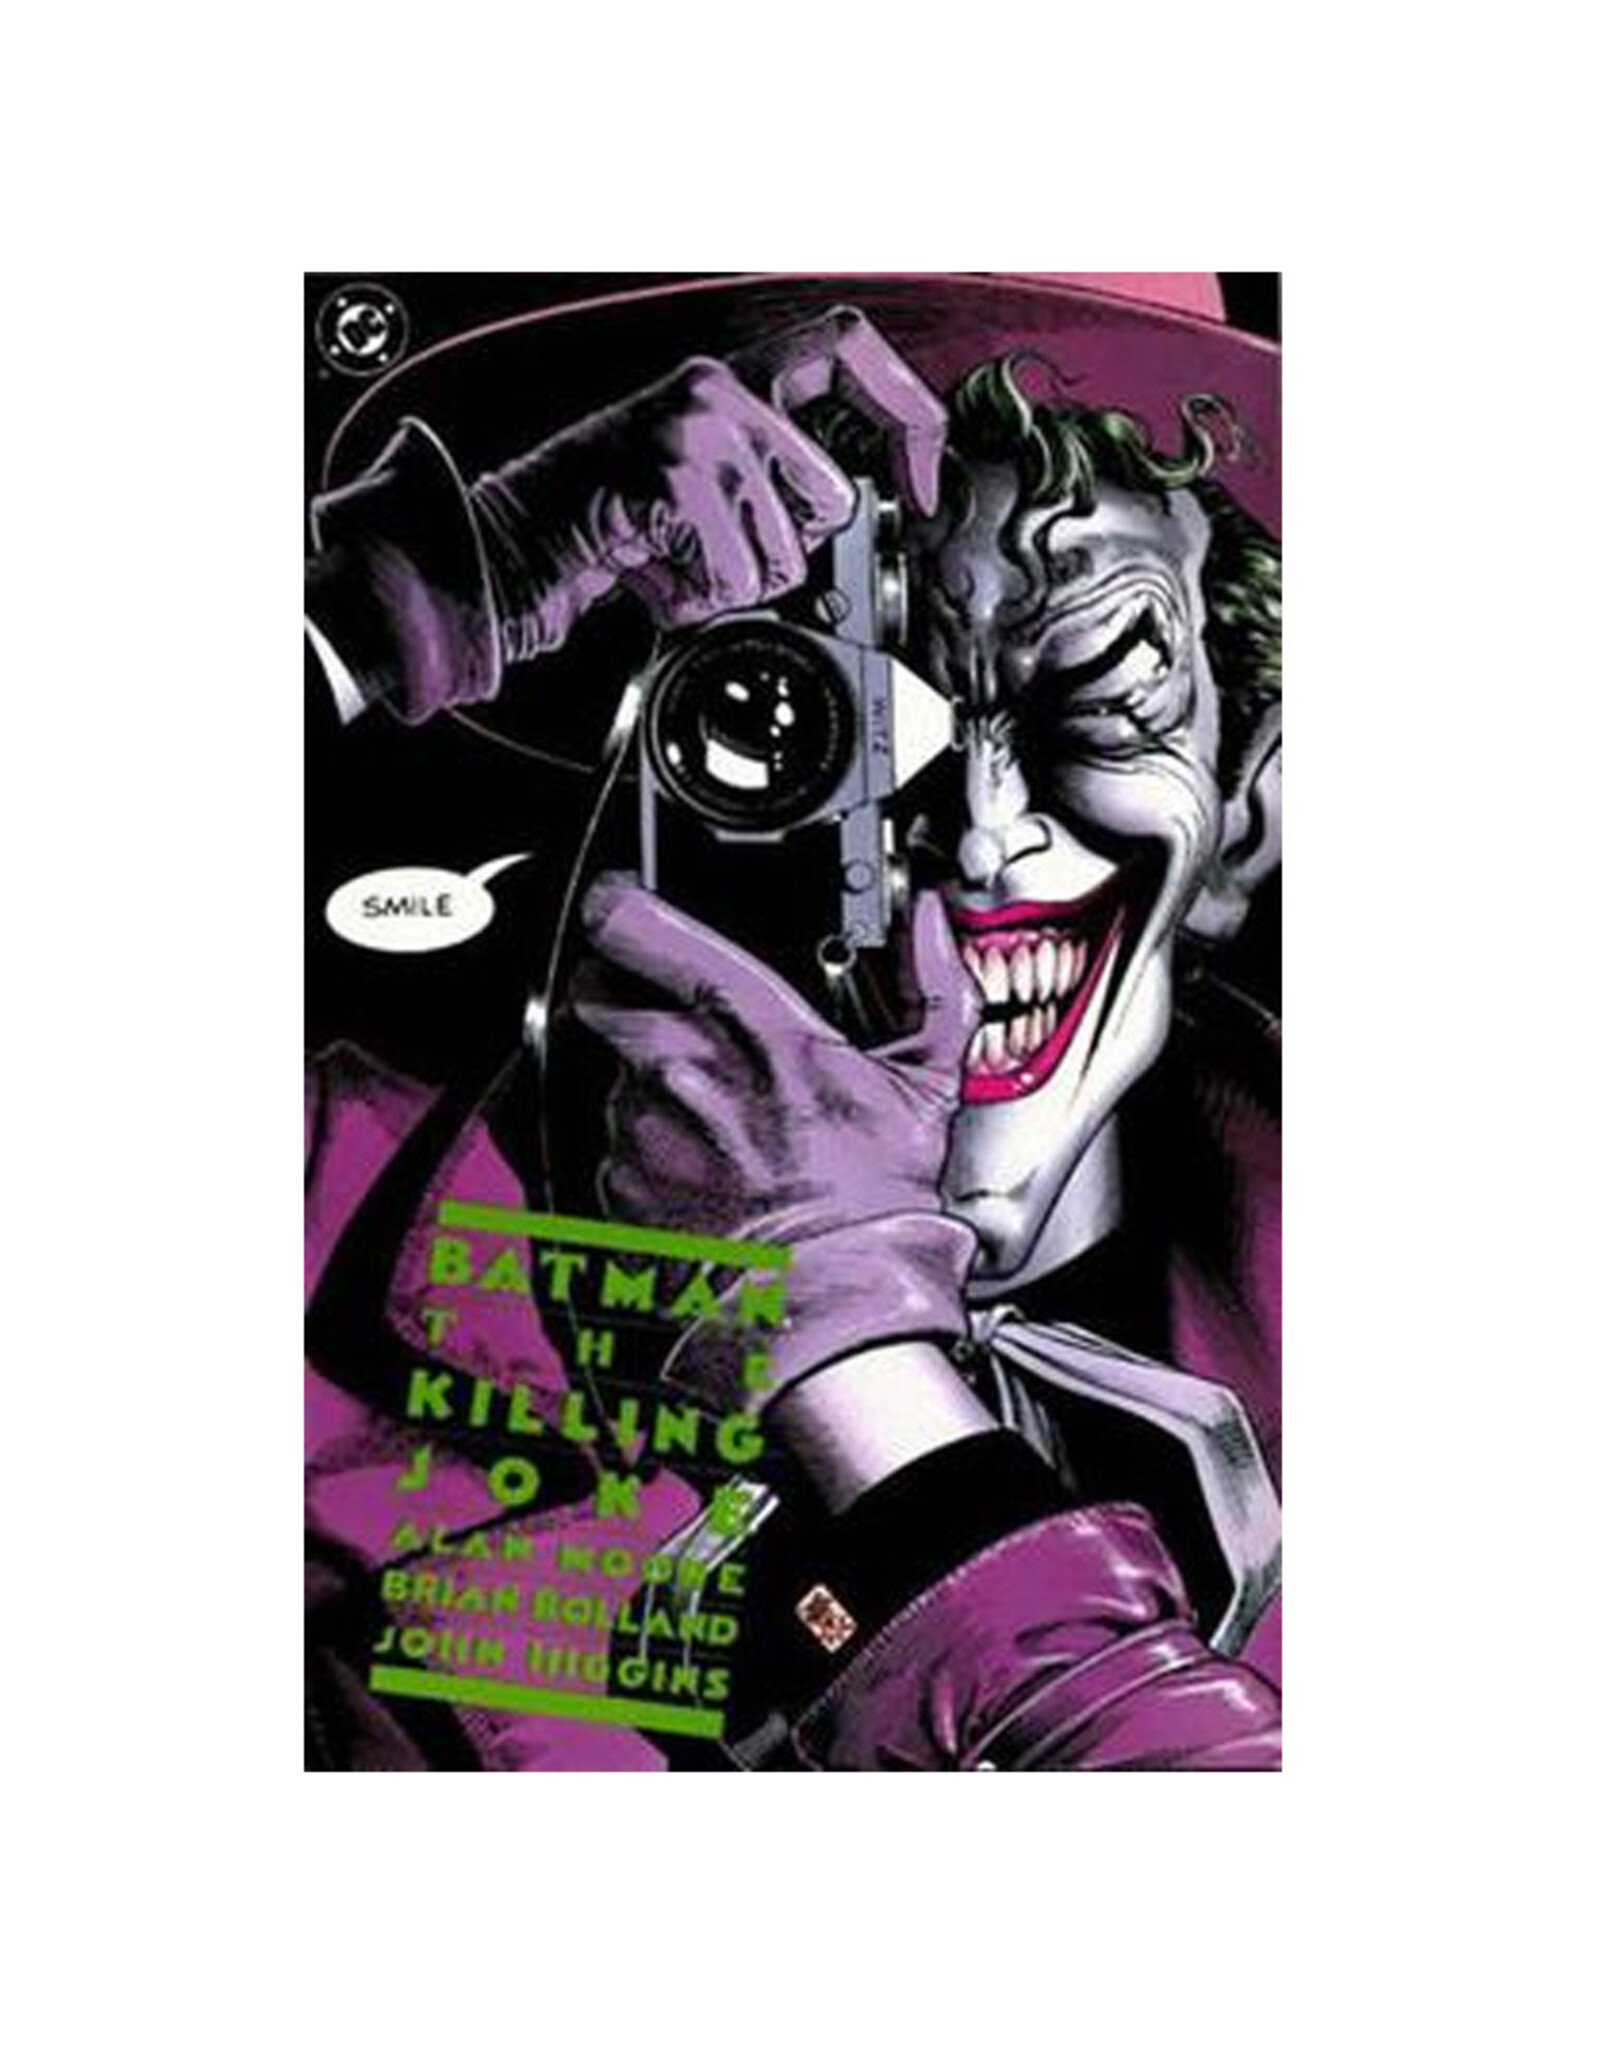 DC Comics Batman: The Killing Joke (1988) first printing